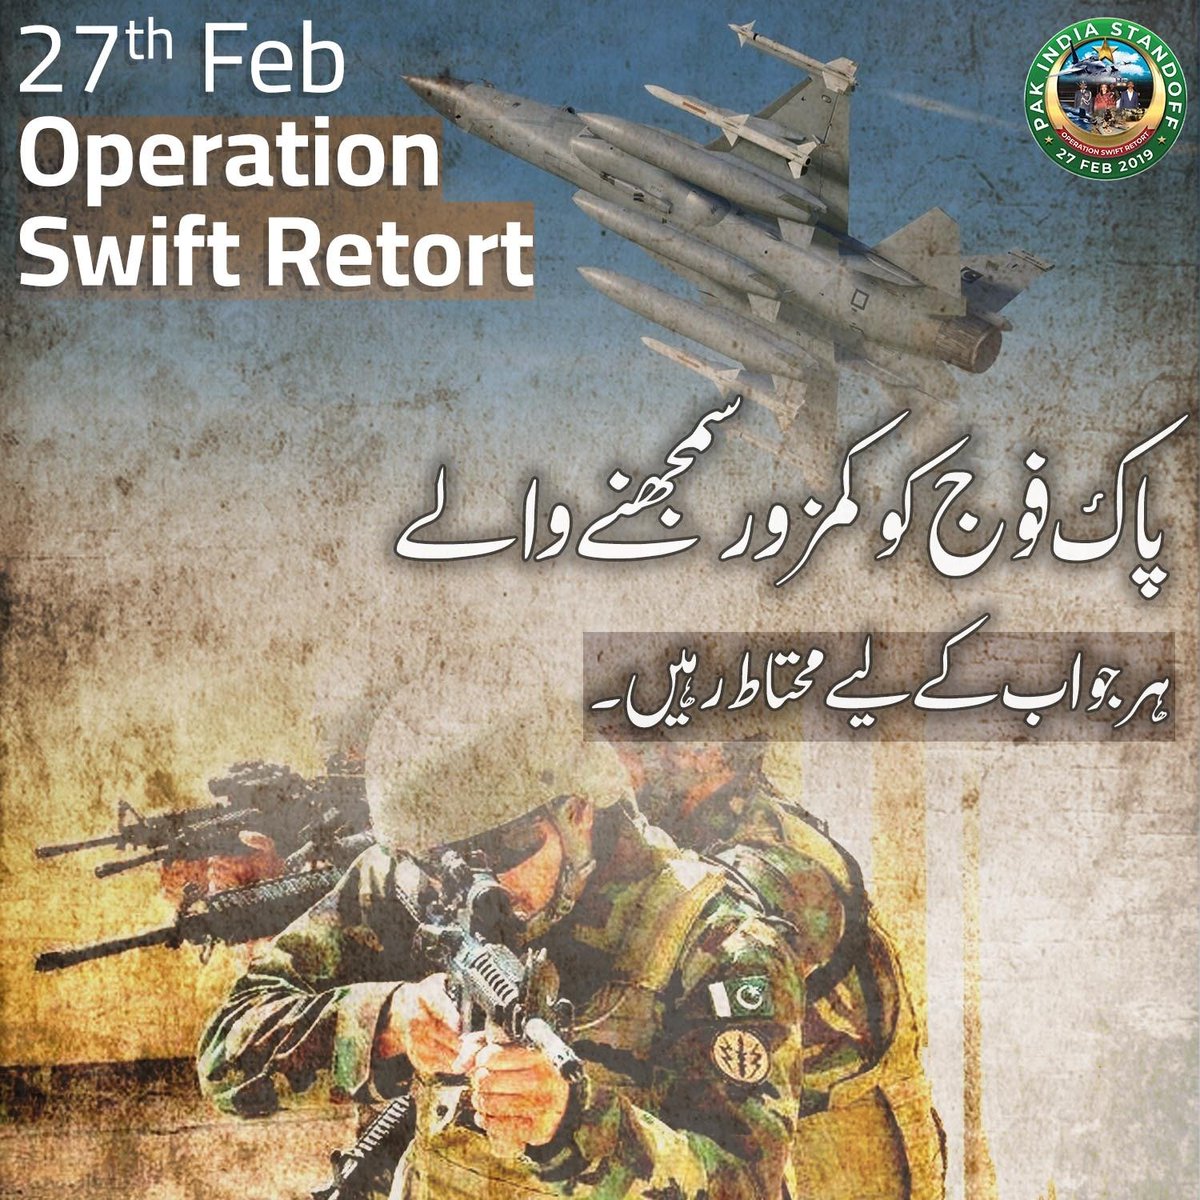 #OperationSwiftRetort
~ جب دشمن کے ناپاک ارادوں کا ہوا اختتام ⚔💪🇵🇰
#FantasticTea #BJPExposed #PakistanArmy #Pakistan #SurpriseDay #Pulwama #India